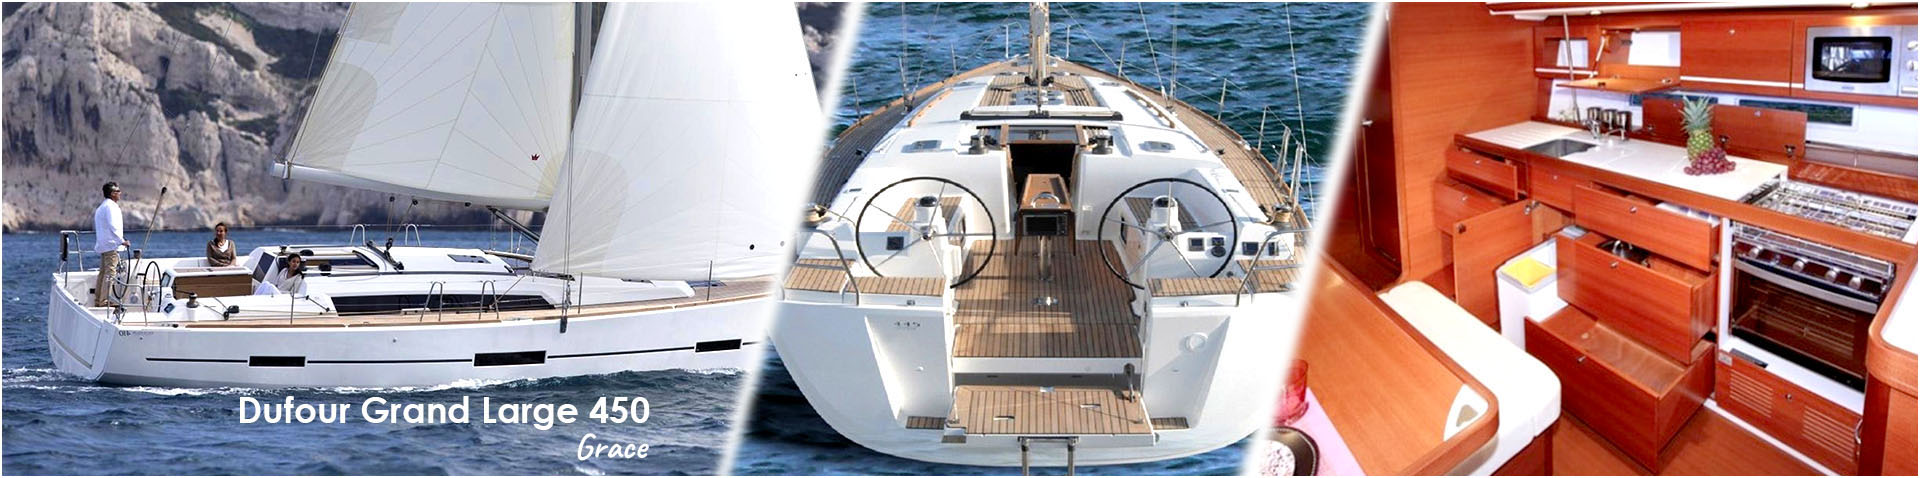 dufour frand large 450 sailing yacht charter Grace